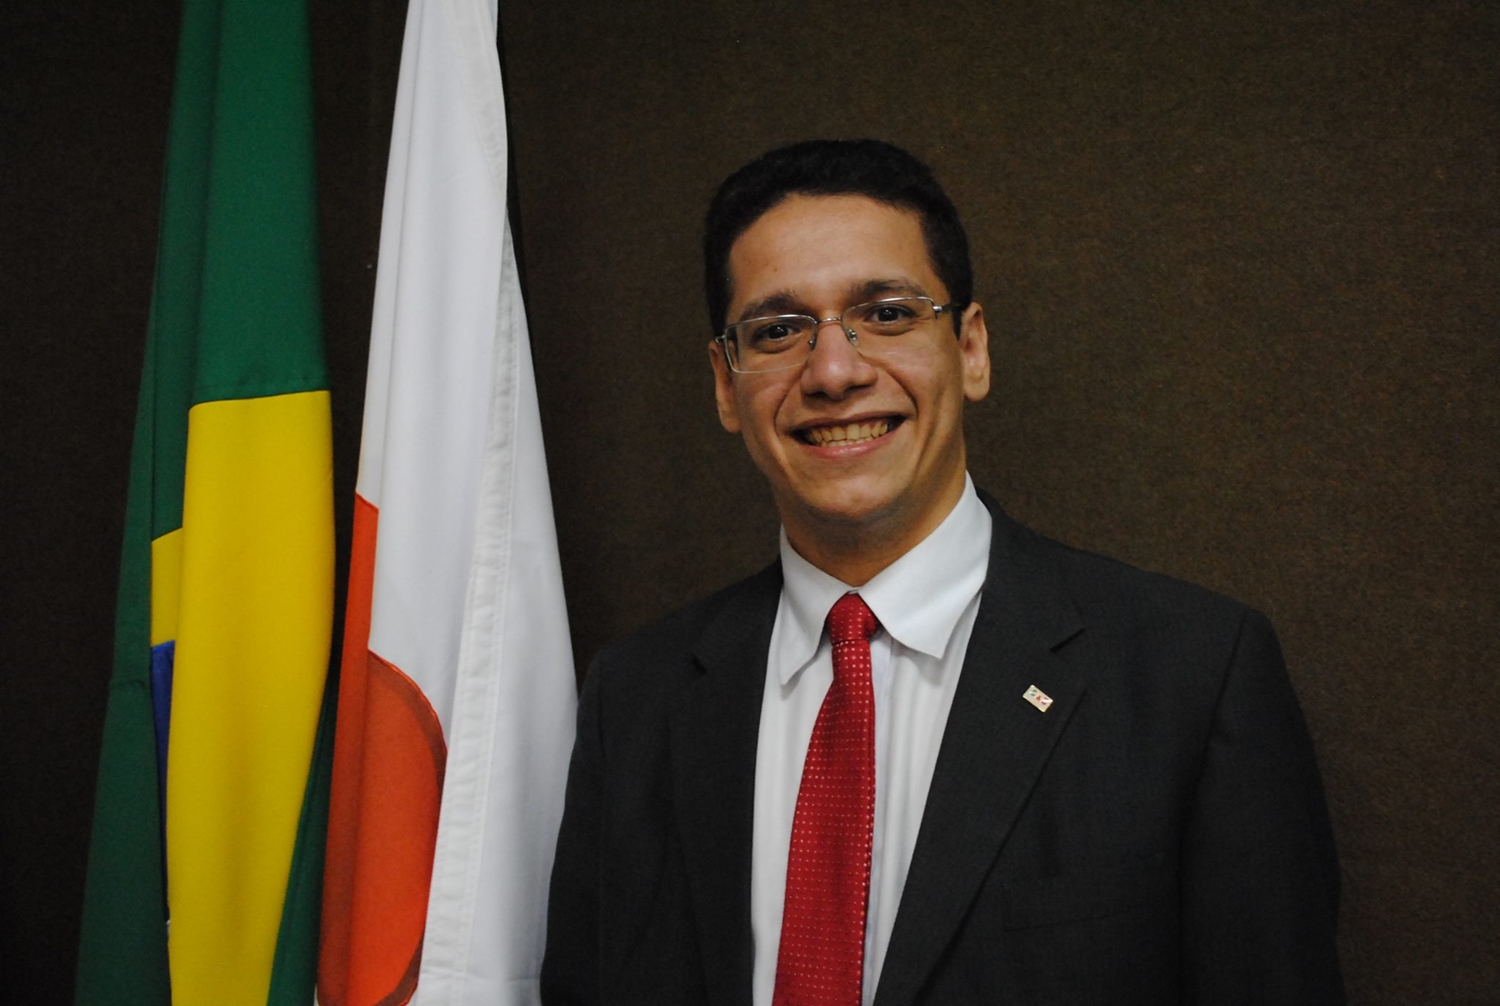 Daniel Oliveira